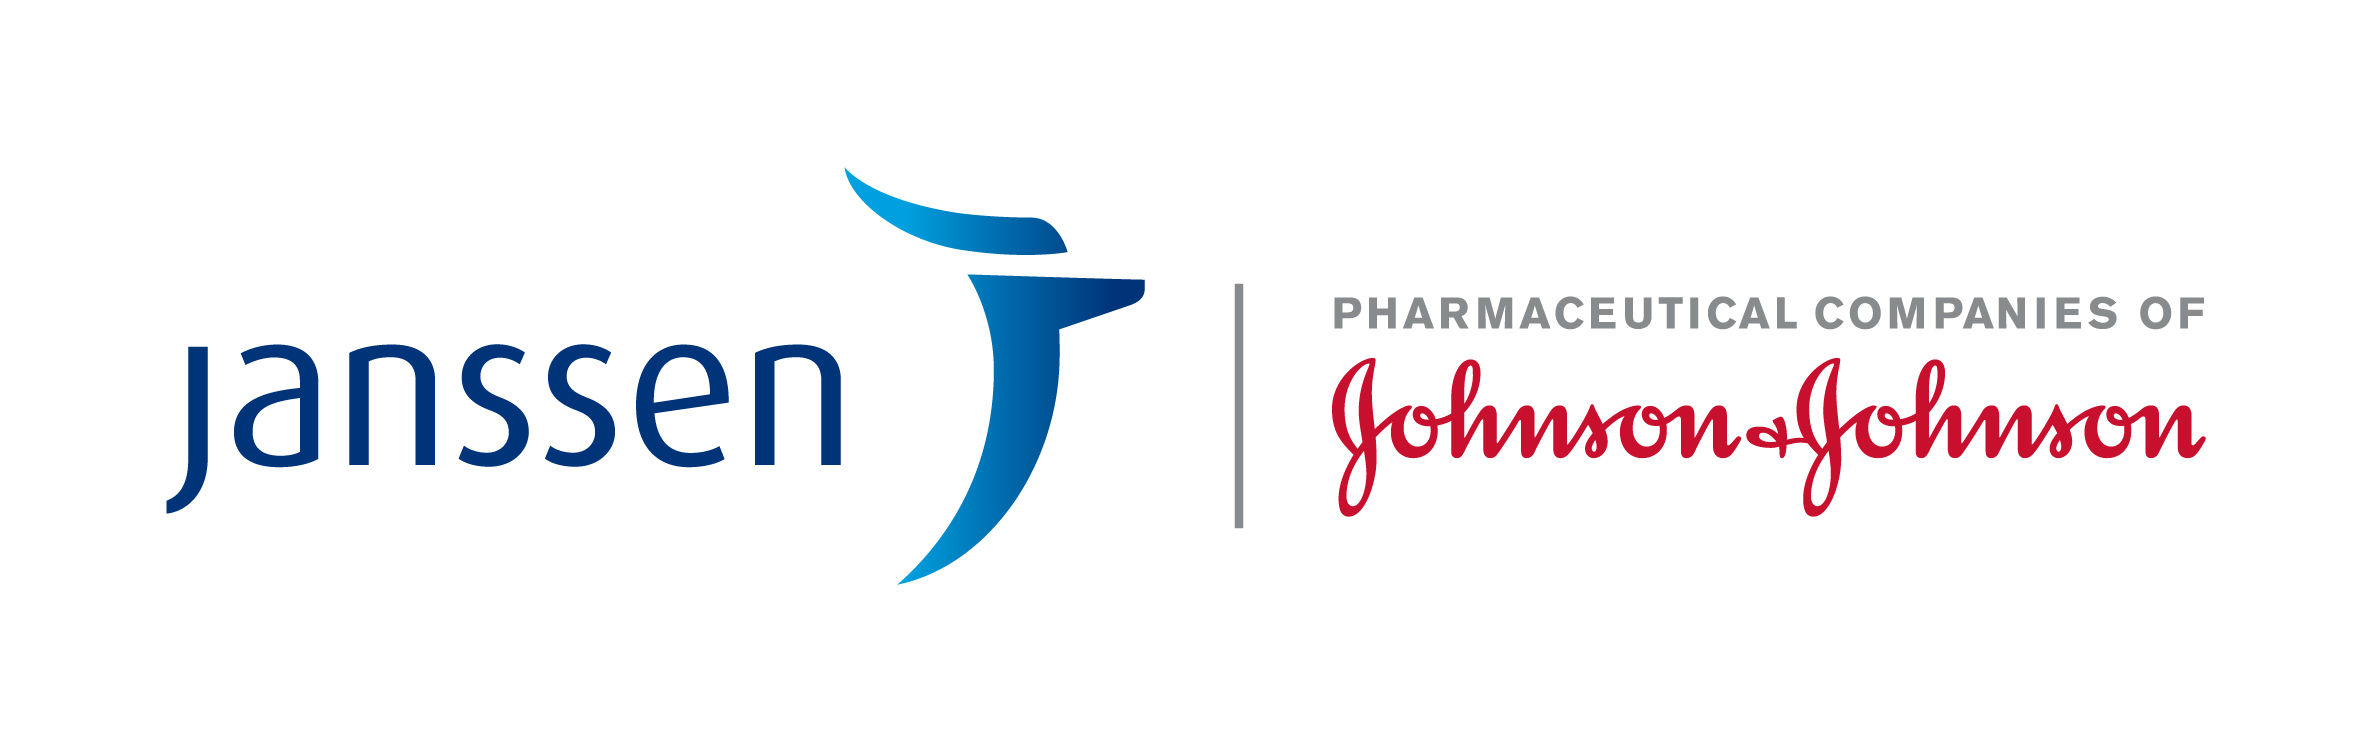 Janssen - Pharmaceutical Companies of Johnson & Johnson